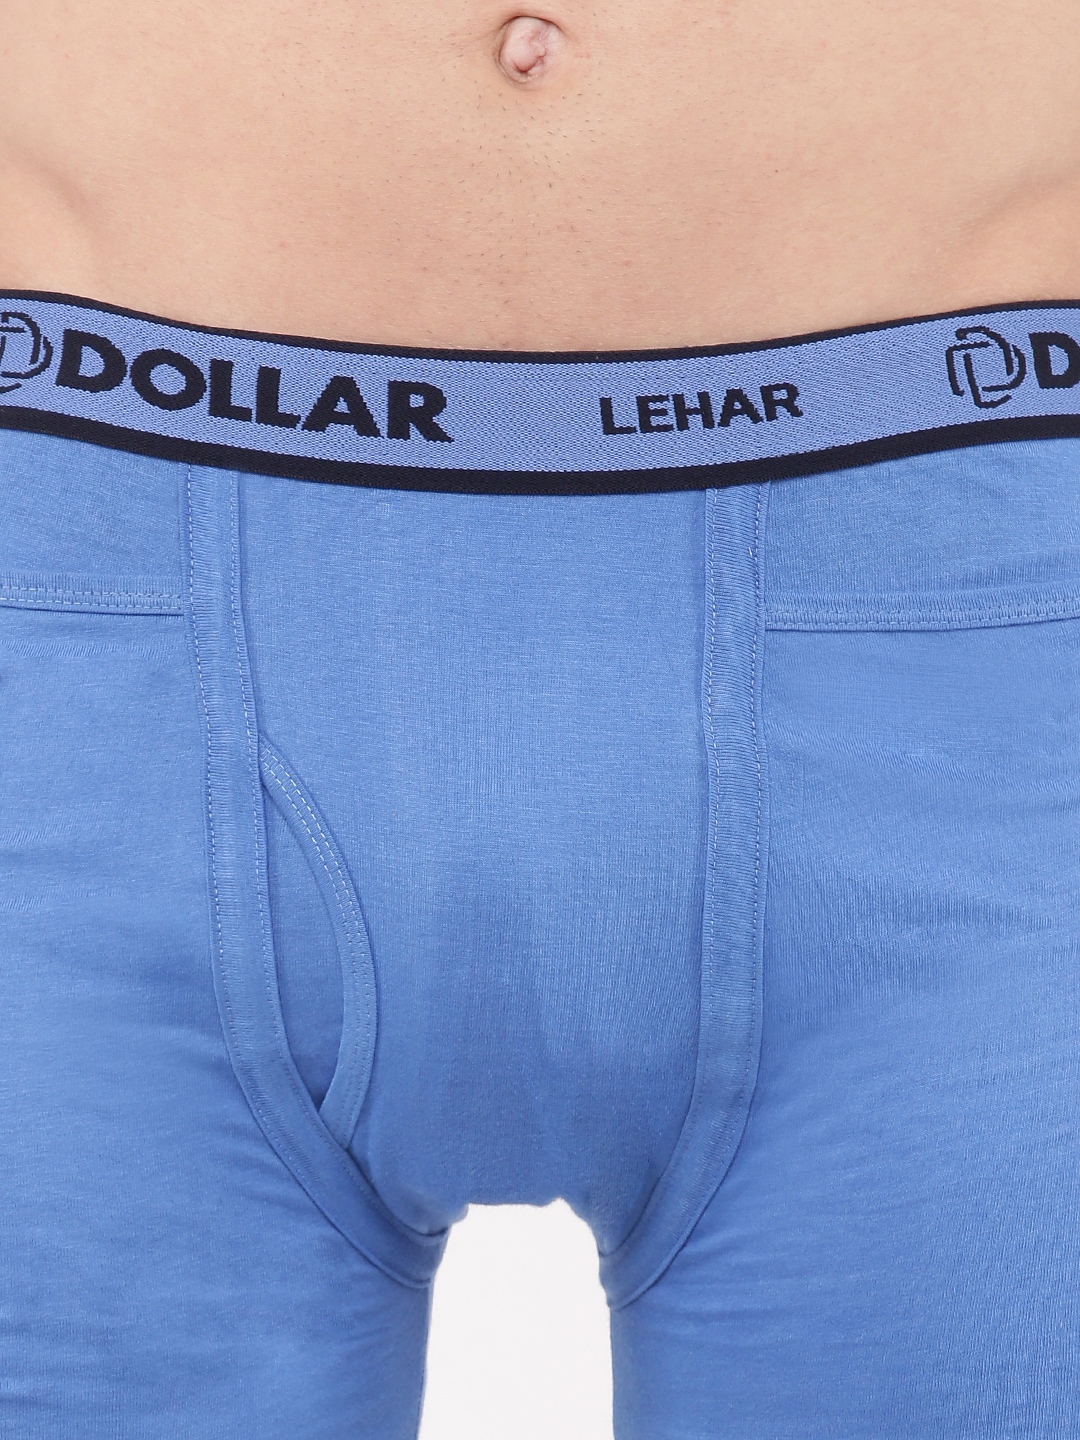 Dollar Lehar Men's Underwear Long Trunk (T/E) - Pack of 4 - BAGDA